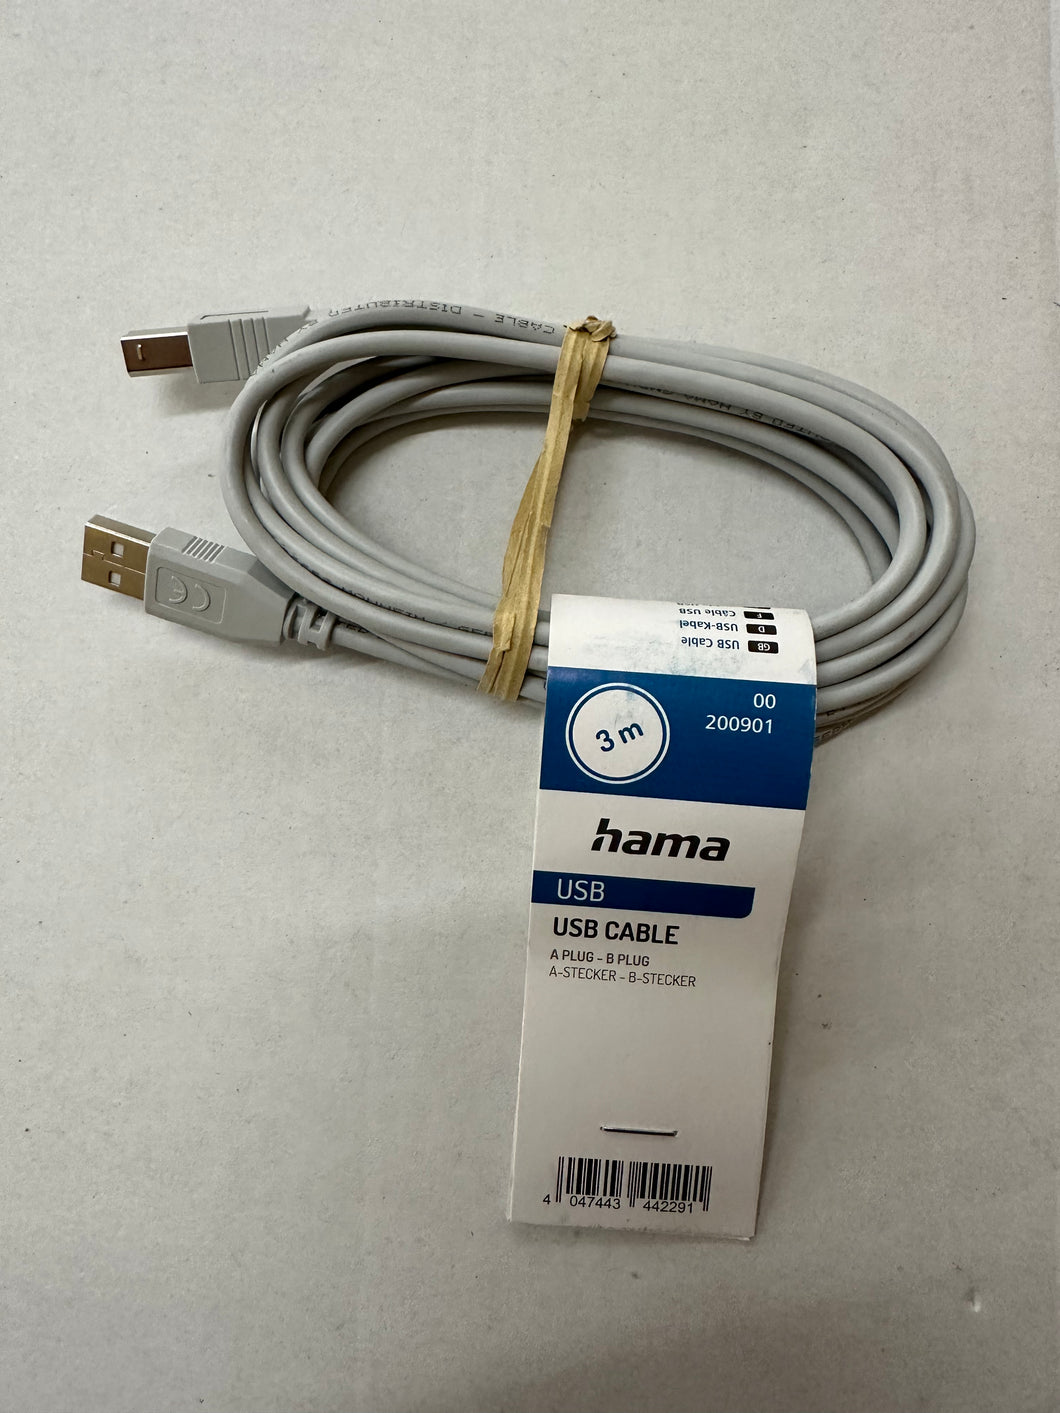 HAMA USB-Kabel, USB 2.0, 3,00 m (00200901)